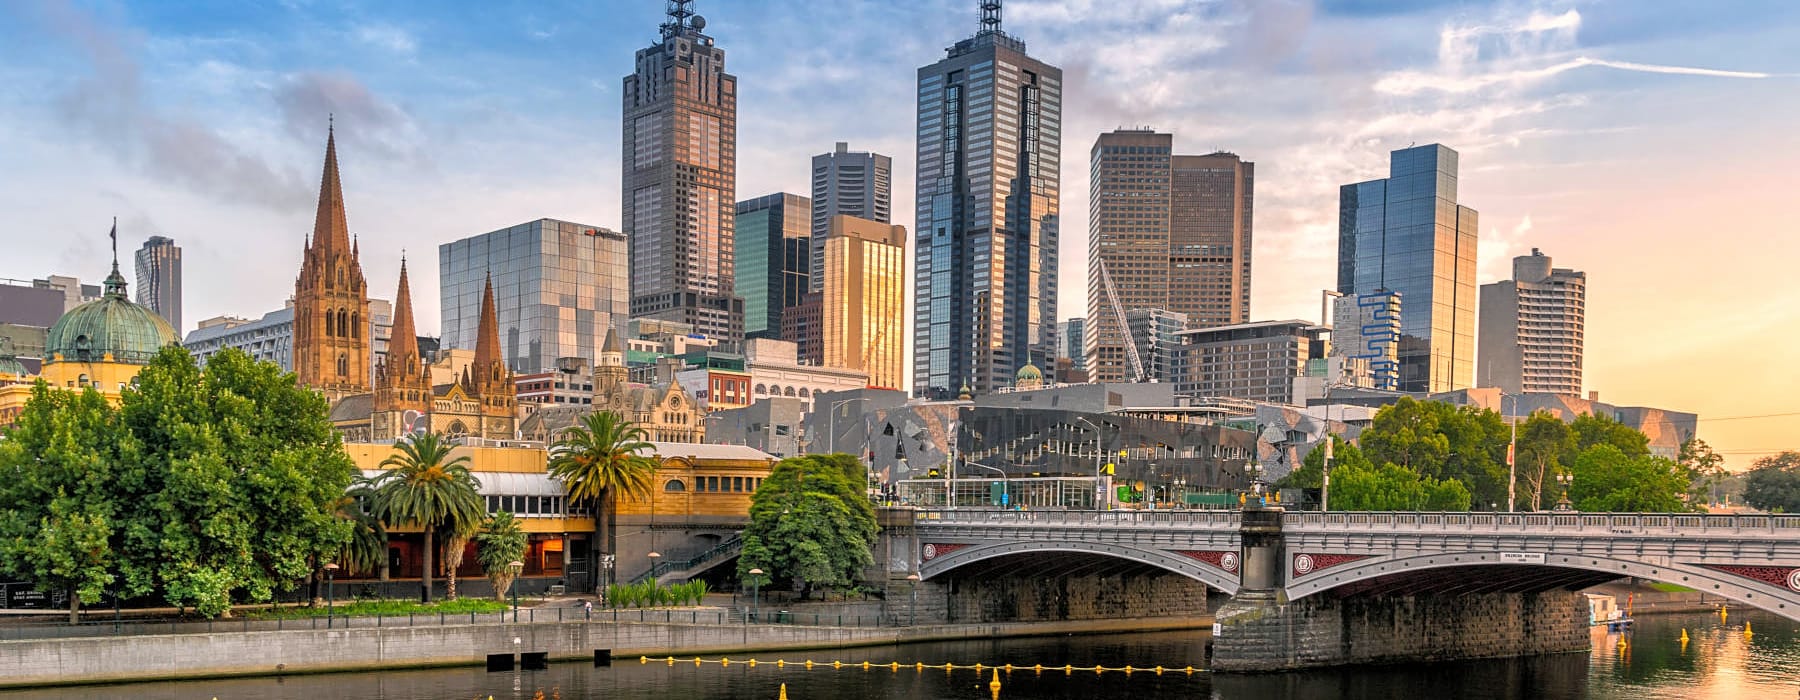 Melbourne's central business district - removals to Melbourne, Australia